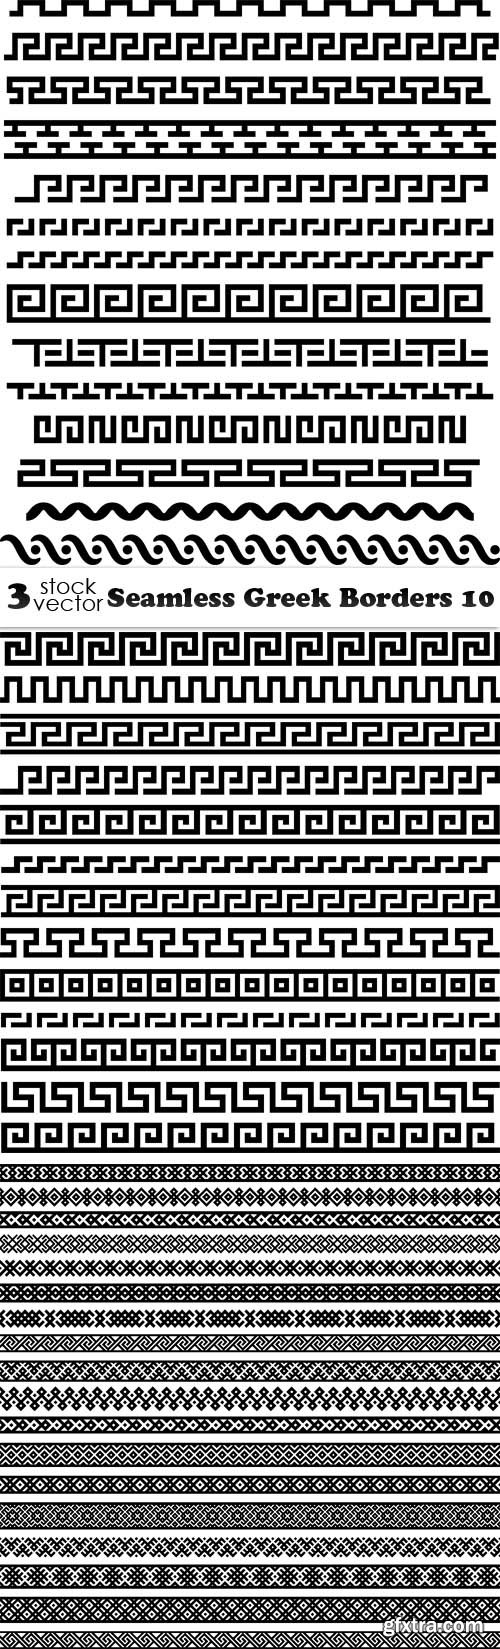 Vectors - Seamless Greek Borders 10